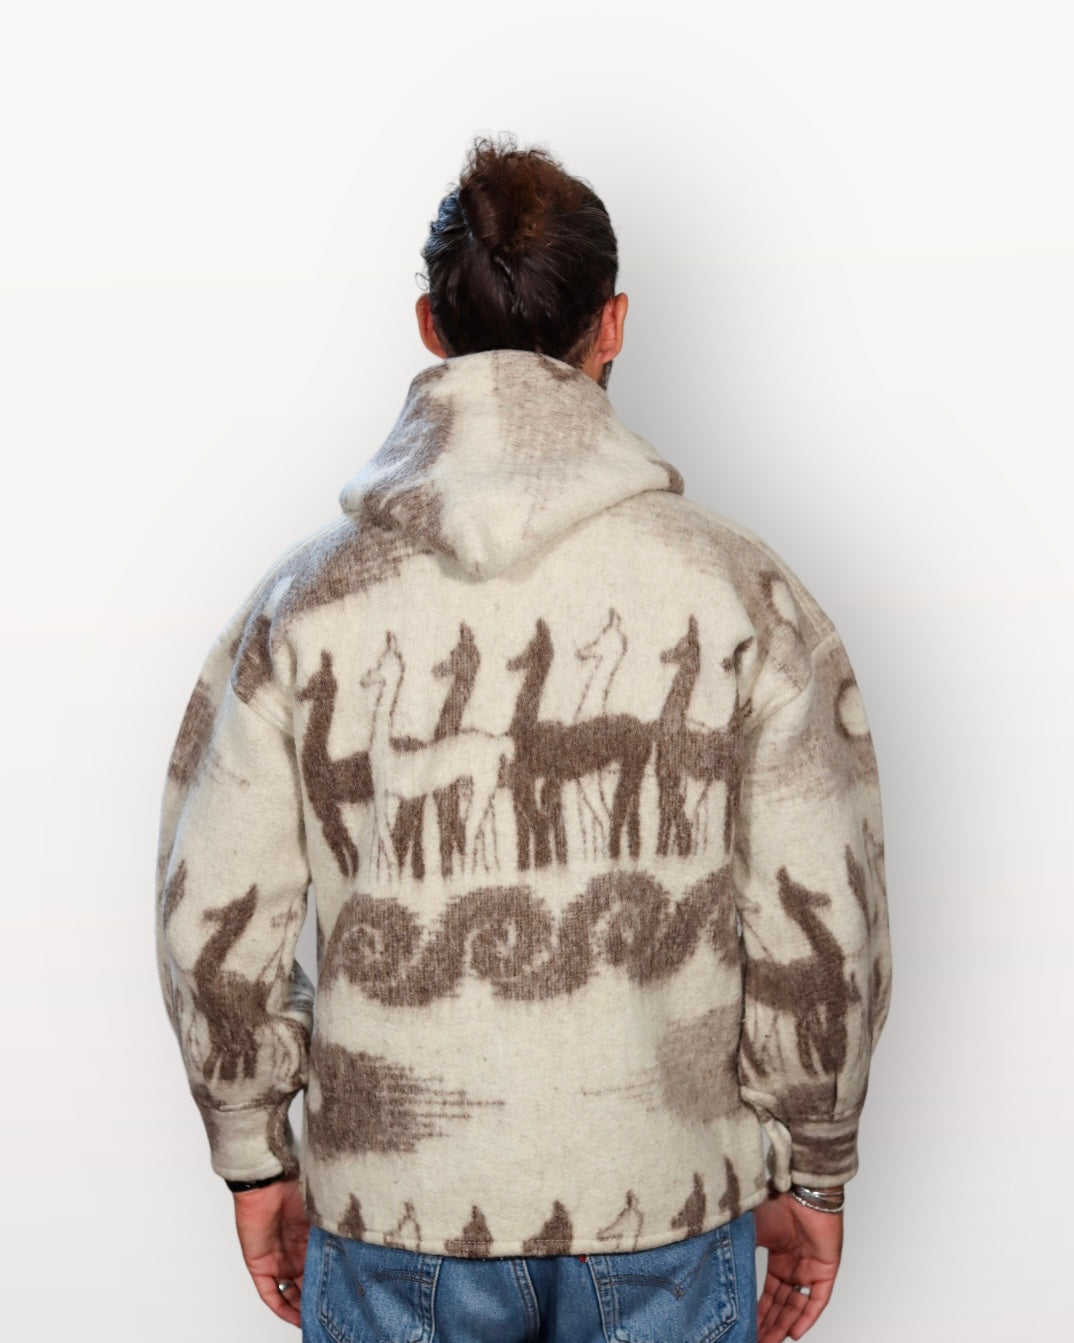 Wool jacket llama - Size S